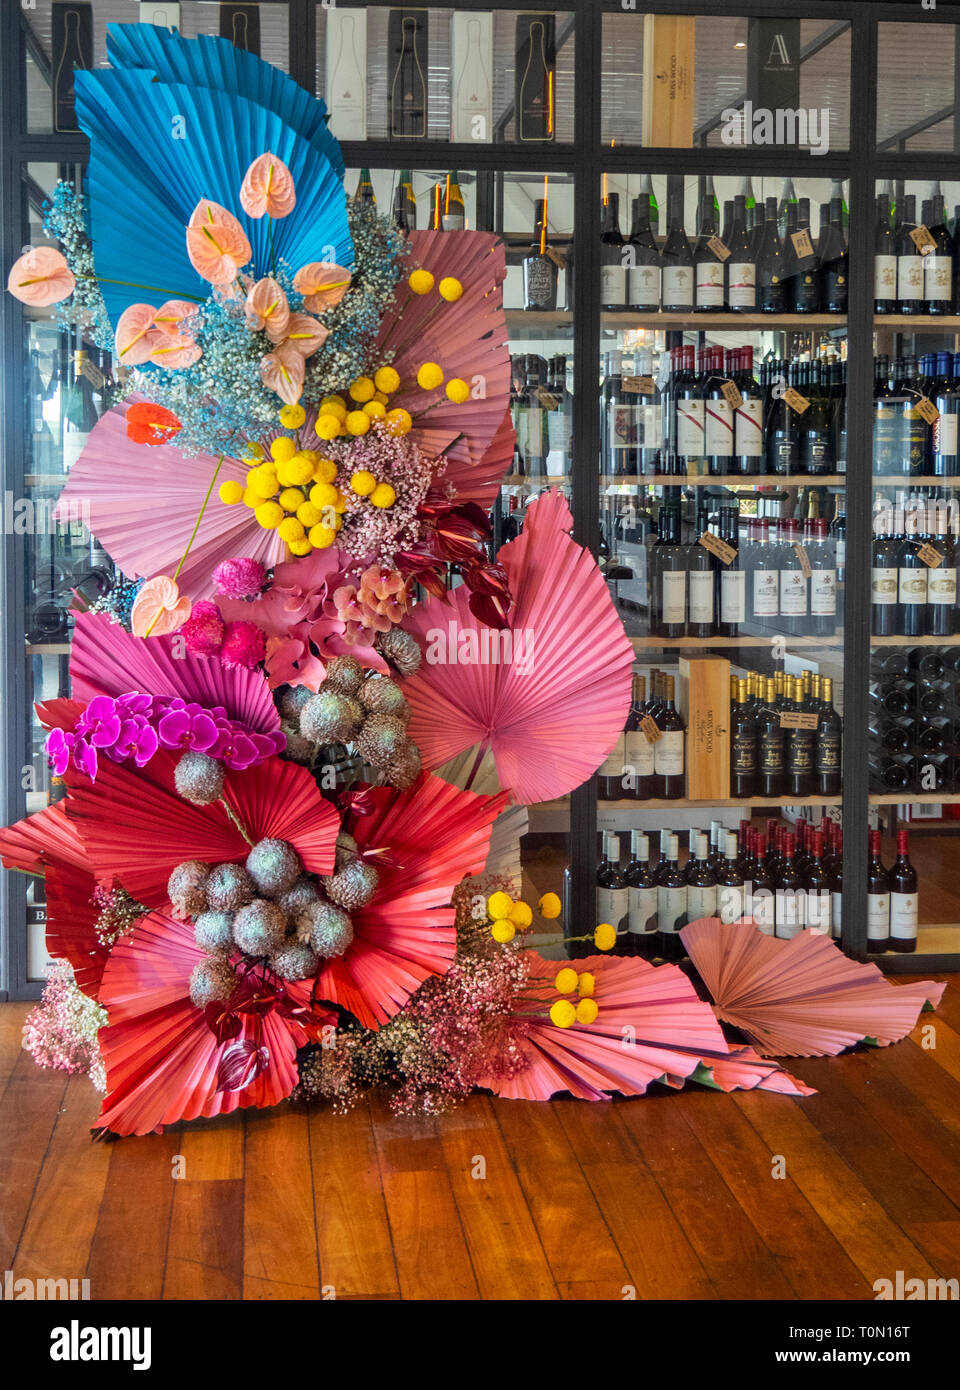 Large flower arrangement on wooden jarrah floorboards in front of red wine bottles in Thomsons Restaurant Rottnest Island WA Australia. Stock Photo